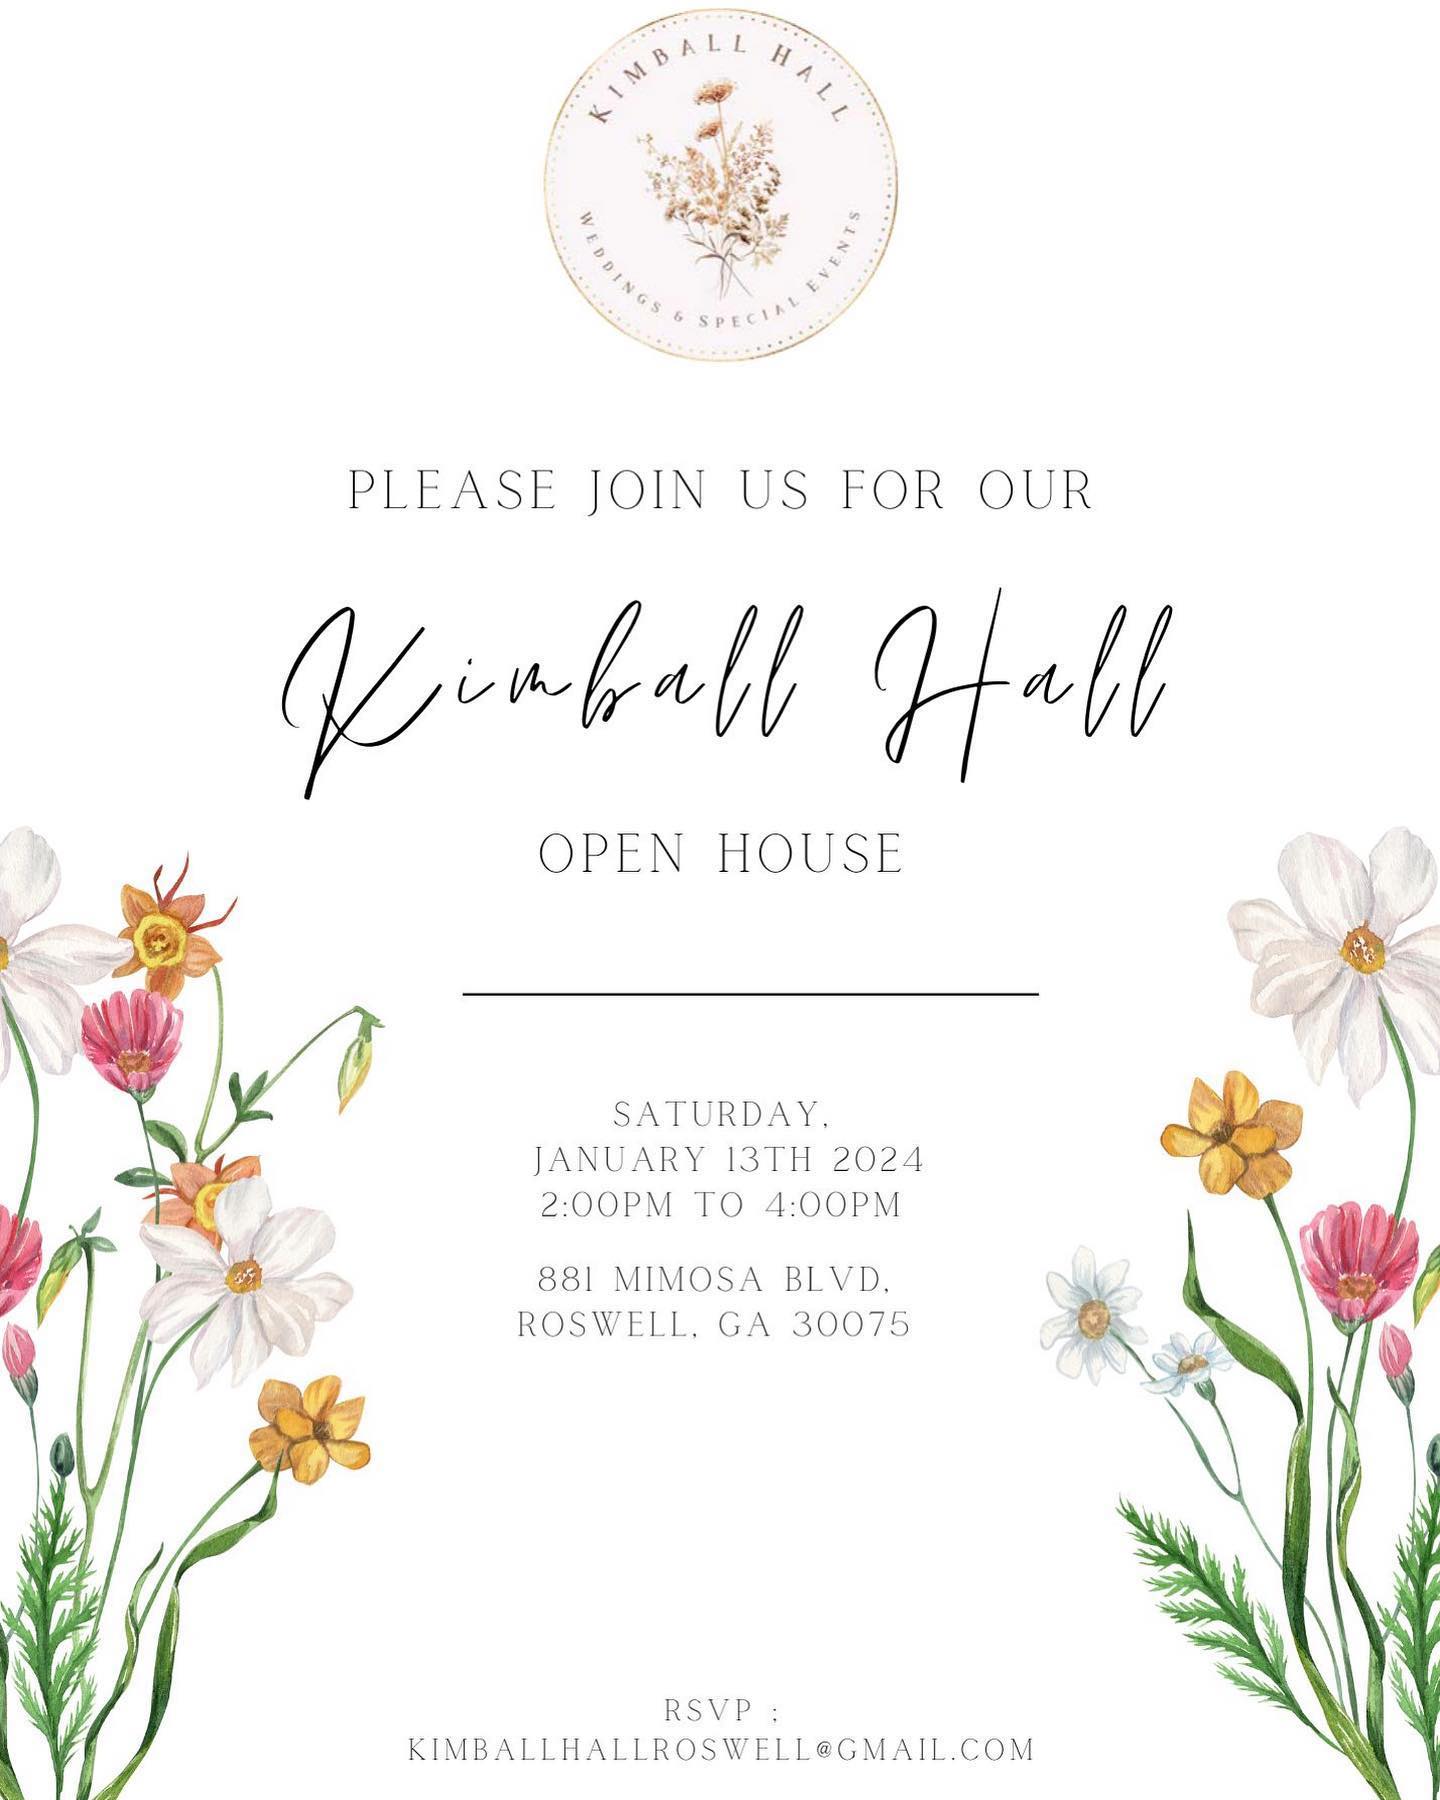 Image for post: Kimball Hall Open House - January 2024